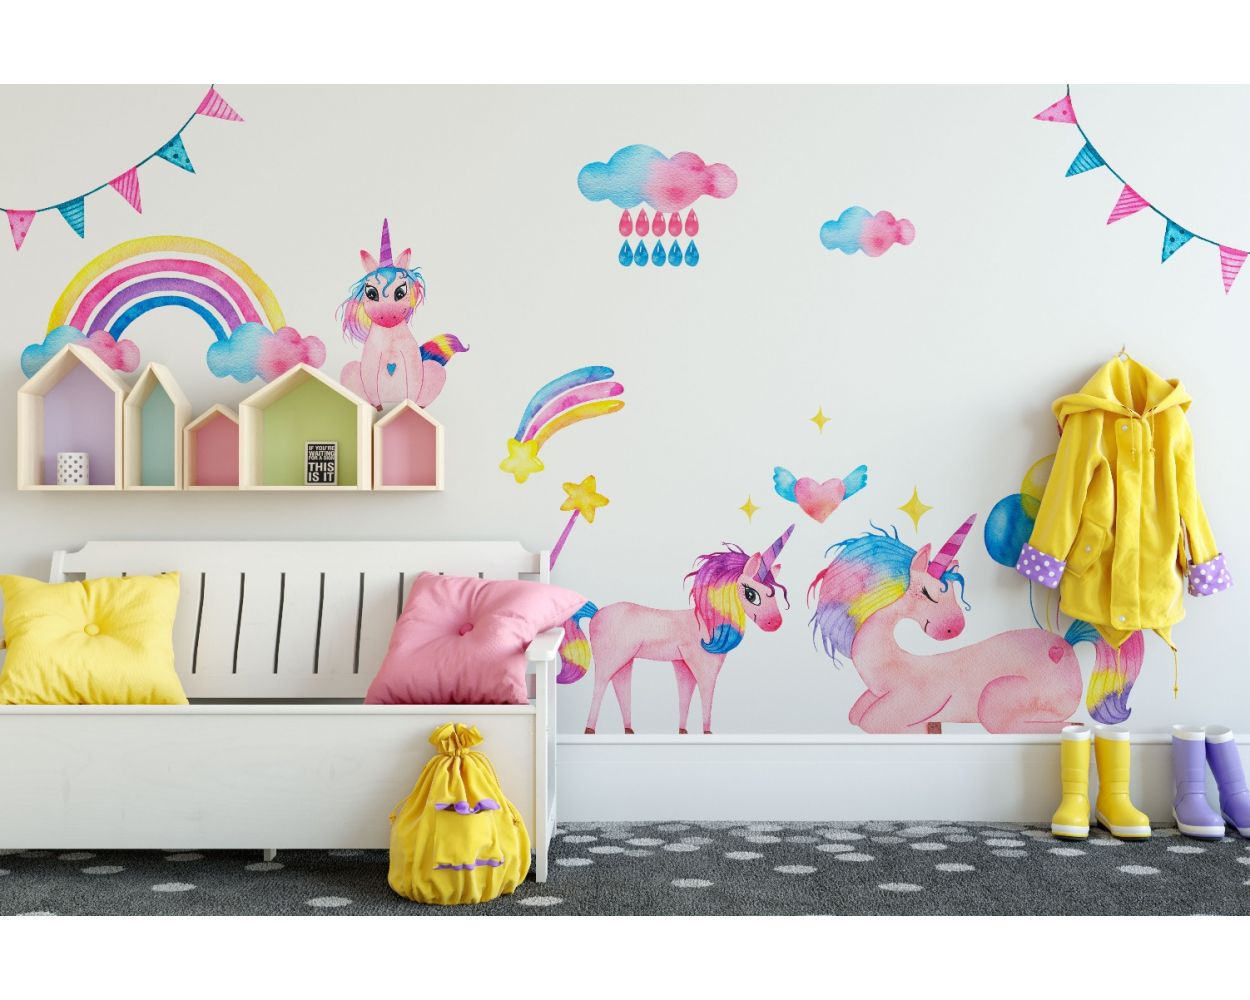 Beautiful Watercolor Magical Sleeping Unicorn Vinyl Wall Decals for Kids Room Wall Decor